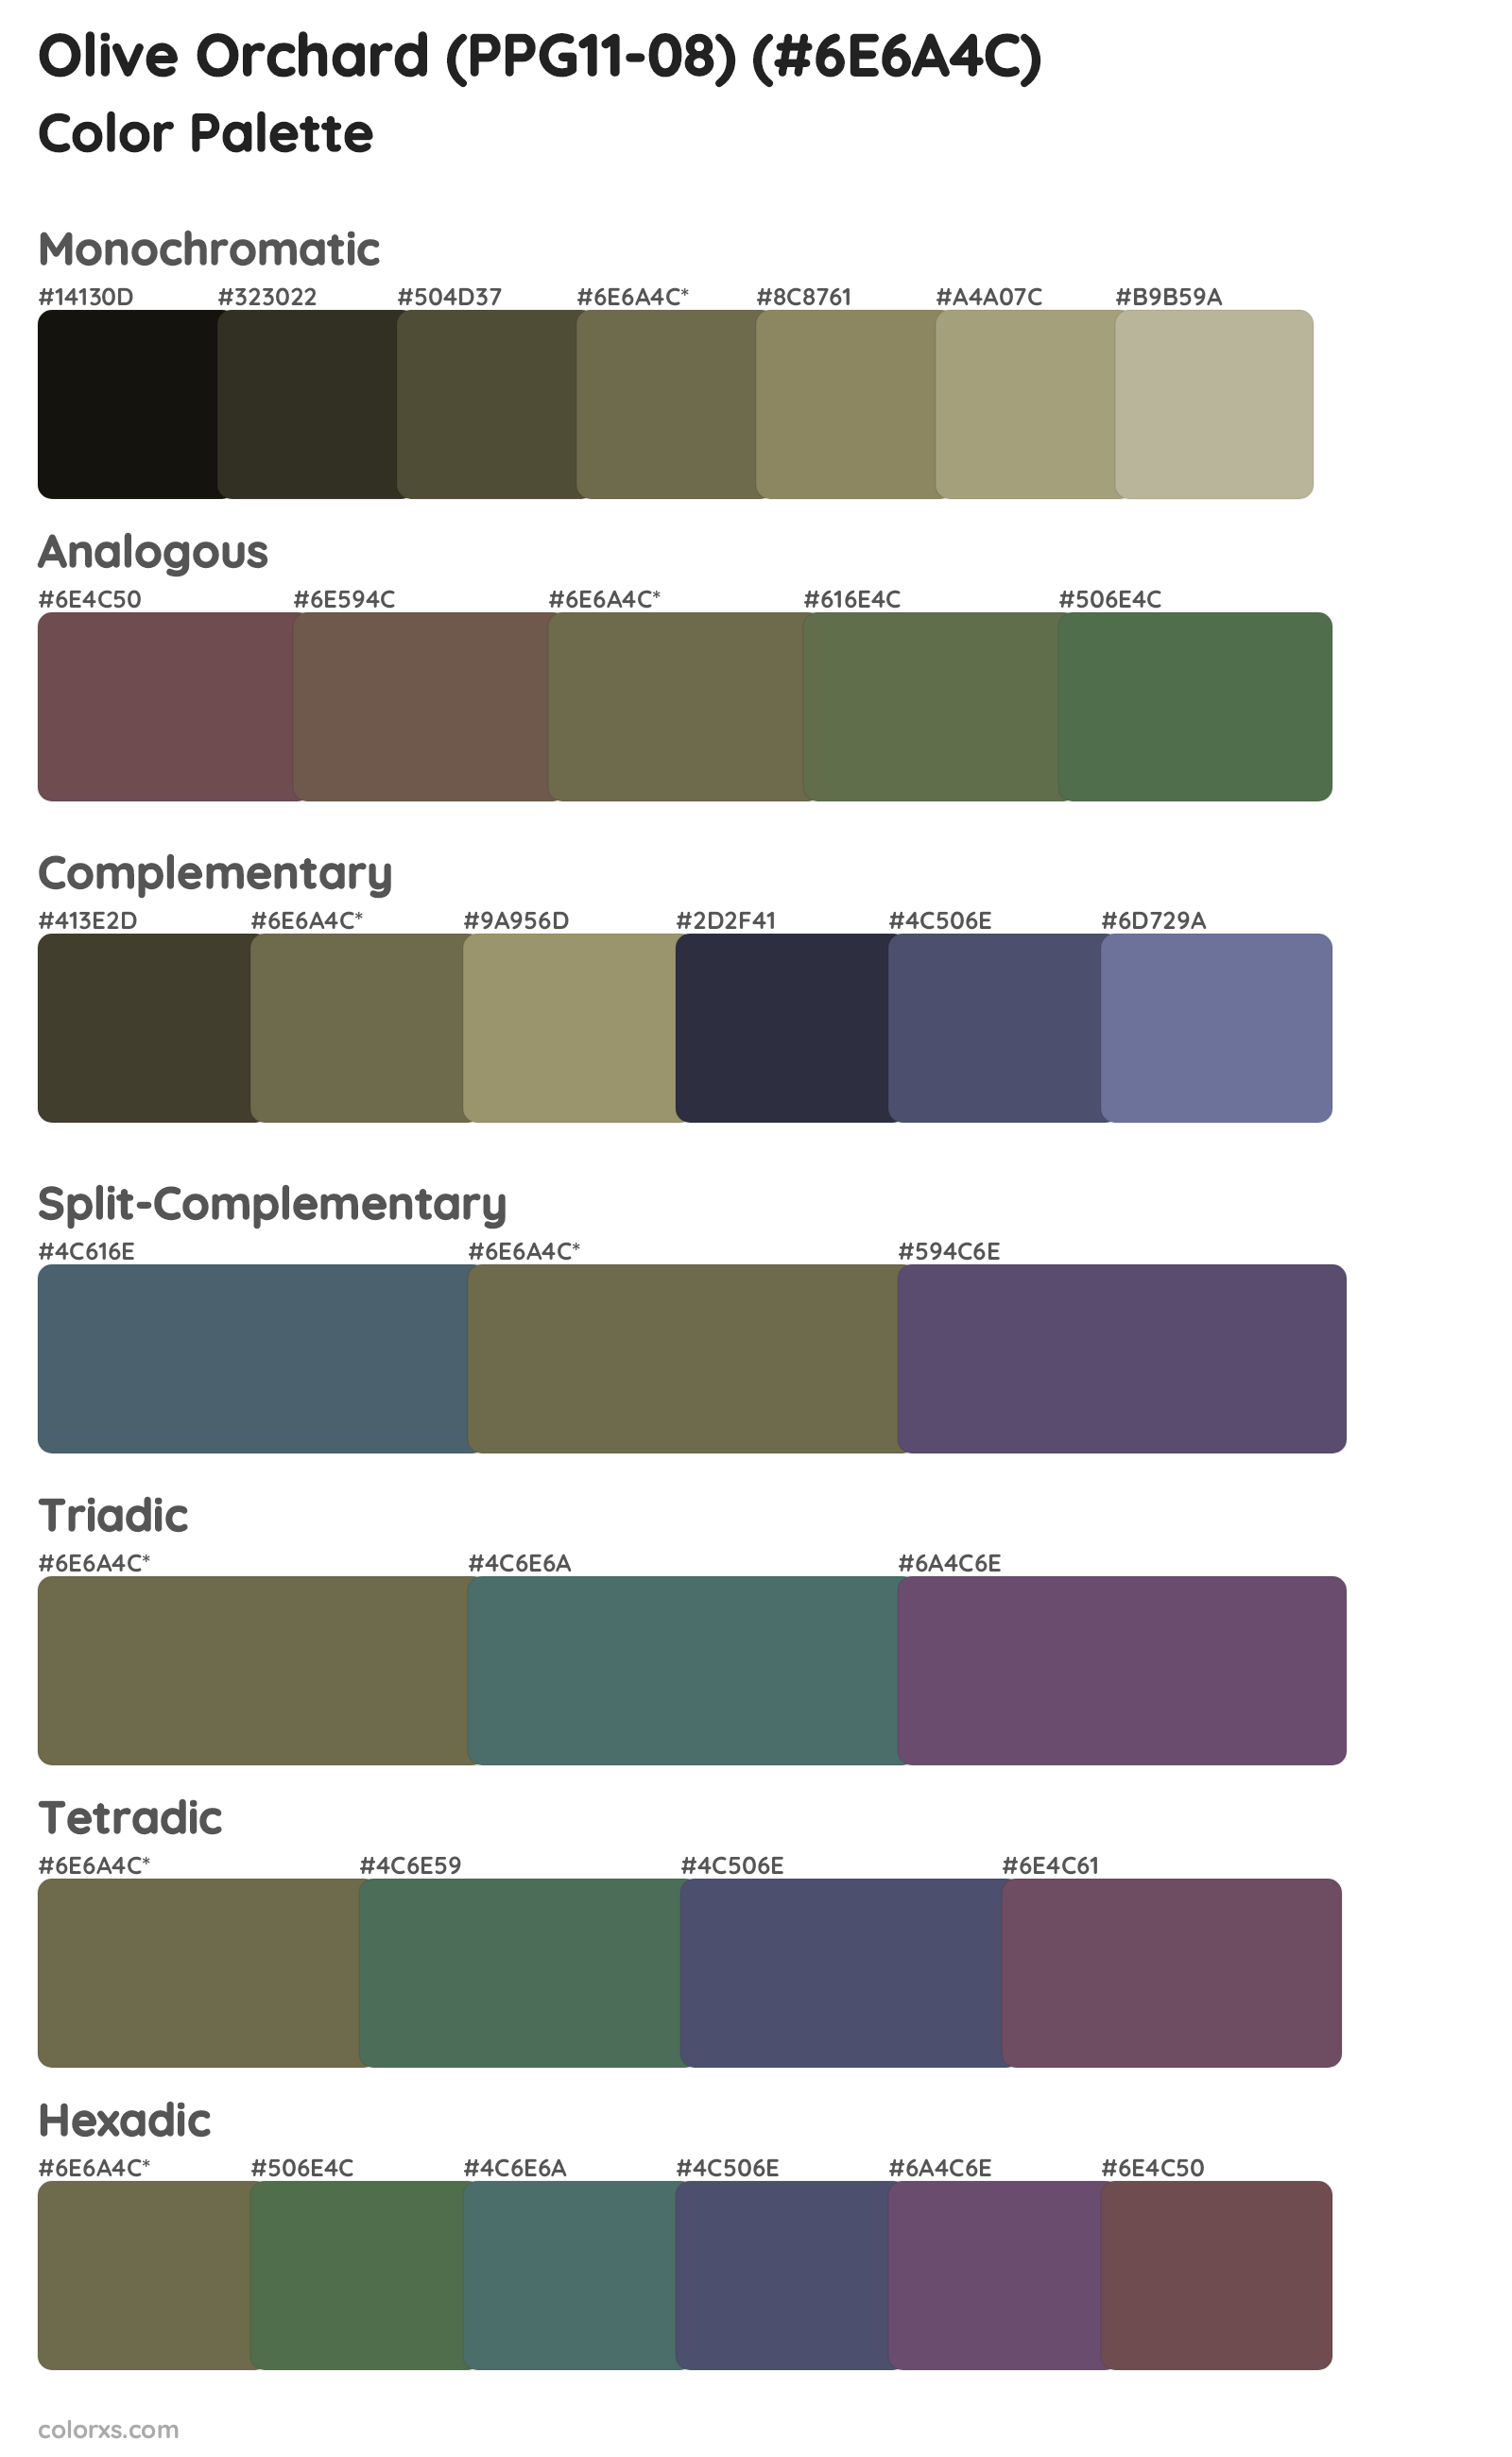 Olive Orchard (PPG11-08) Color Scheme Palettes